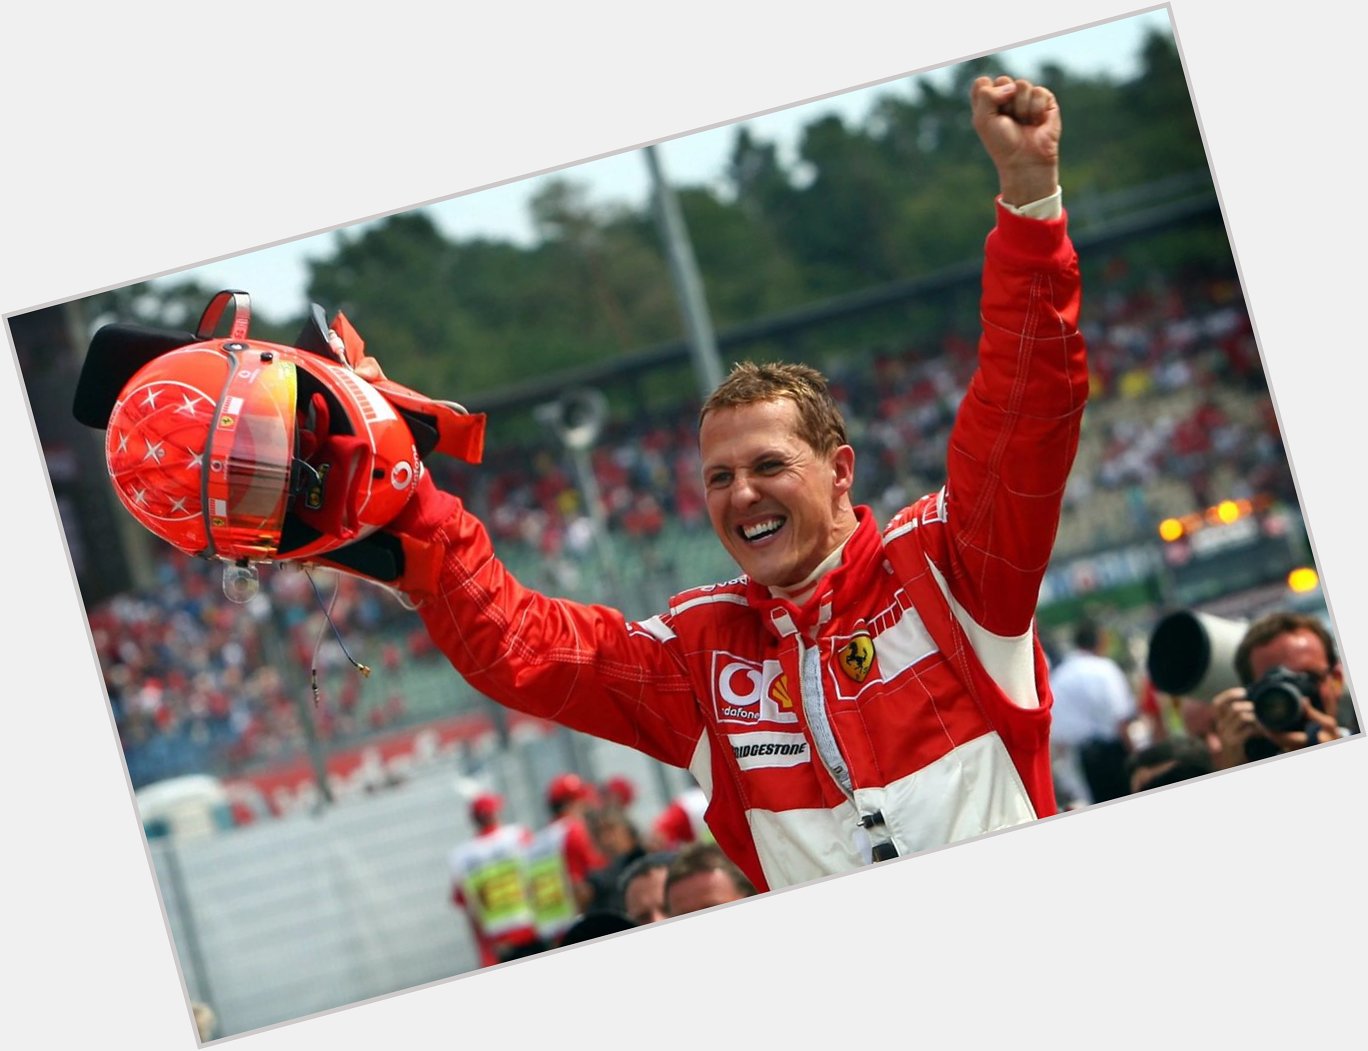 Happy Birthday Michael Schumacher, 52 today.  